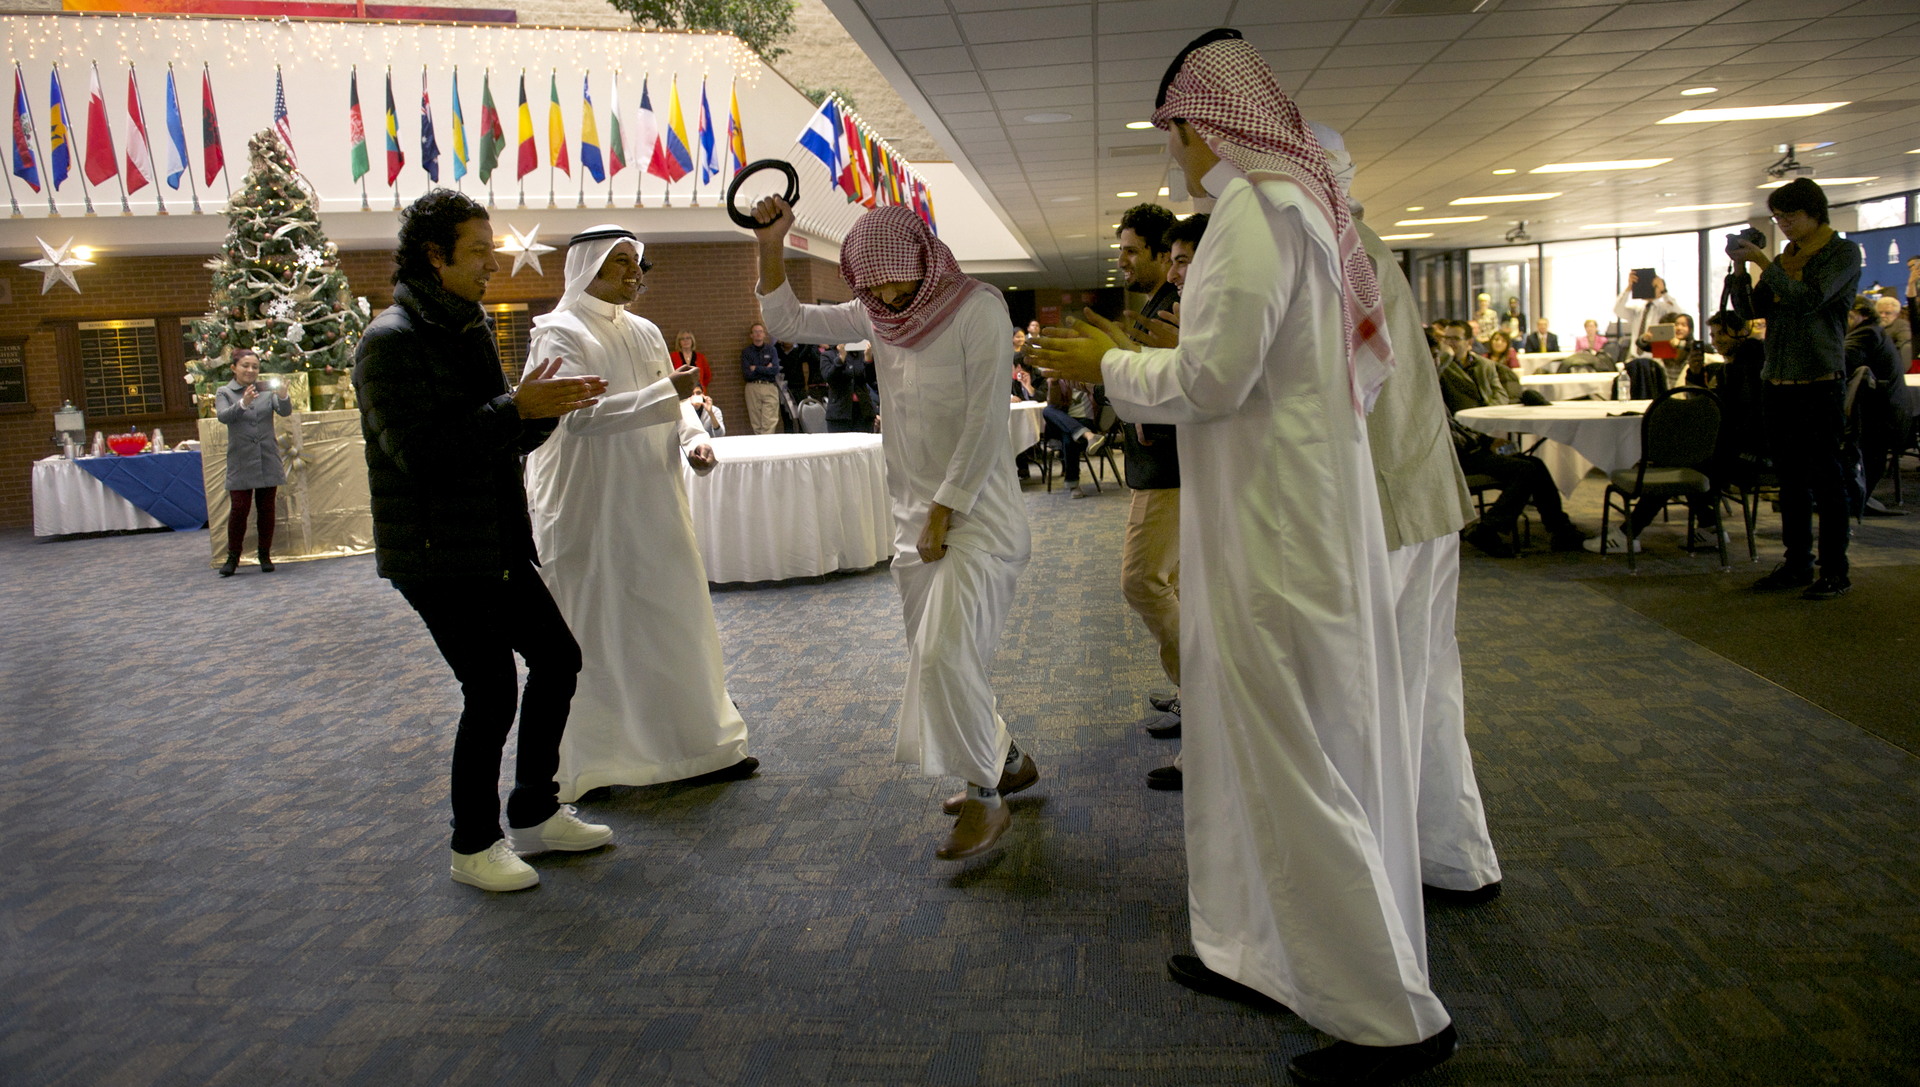 saudi students dancing, flags, holiday tree